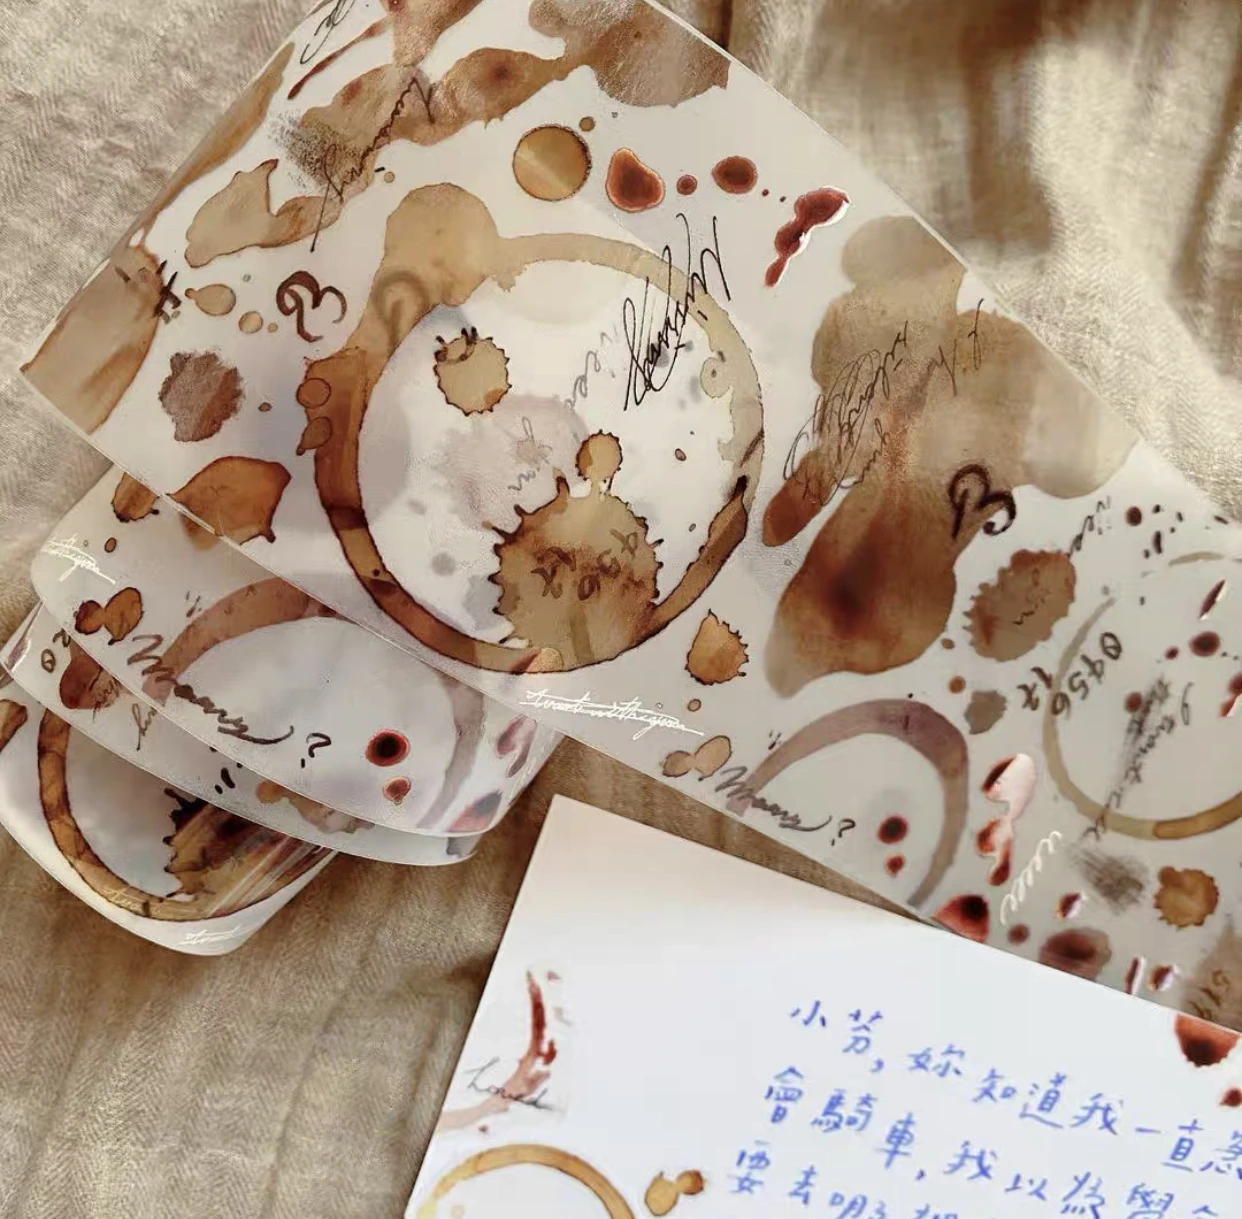 

Shiwu Studio Love масло какао кофе Washi лента для изготовления открыток своими руками